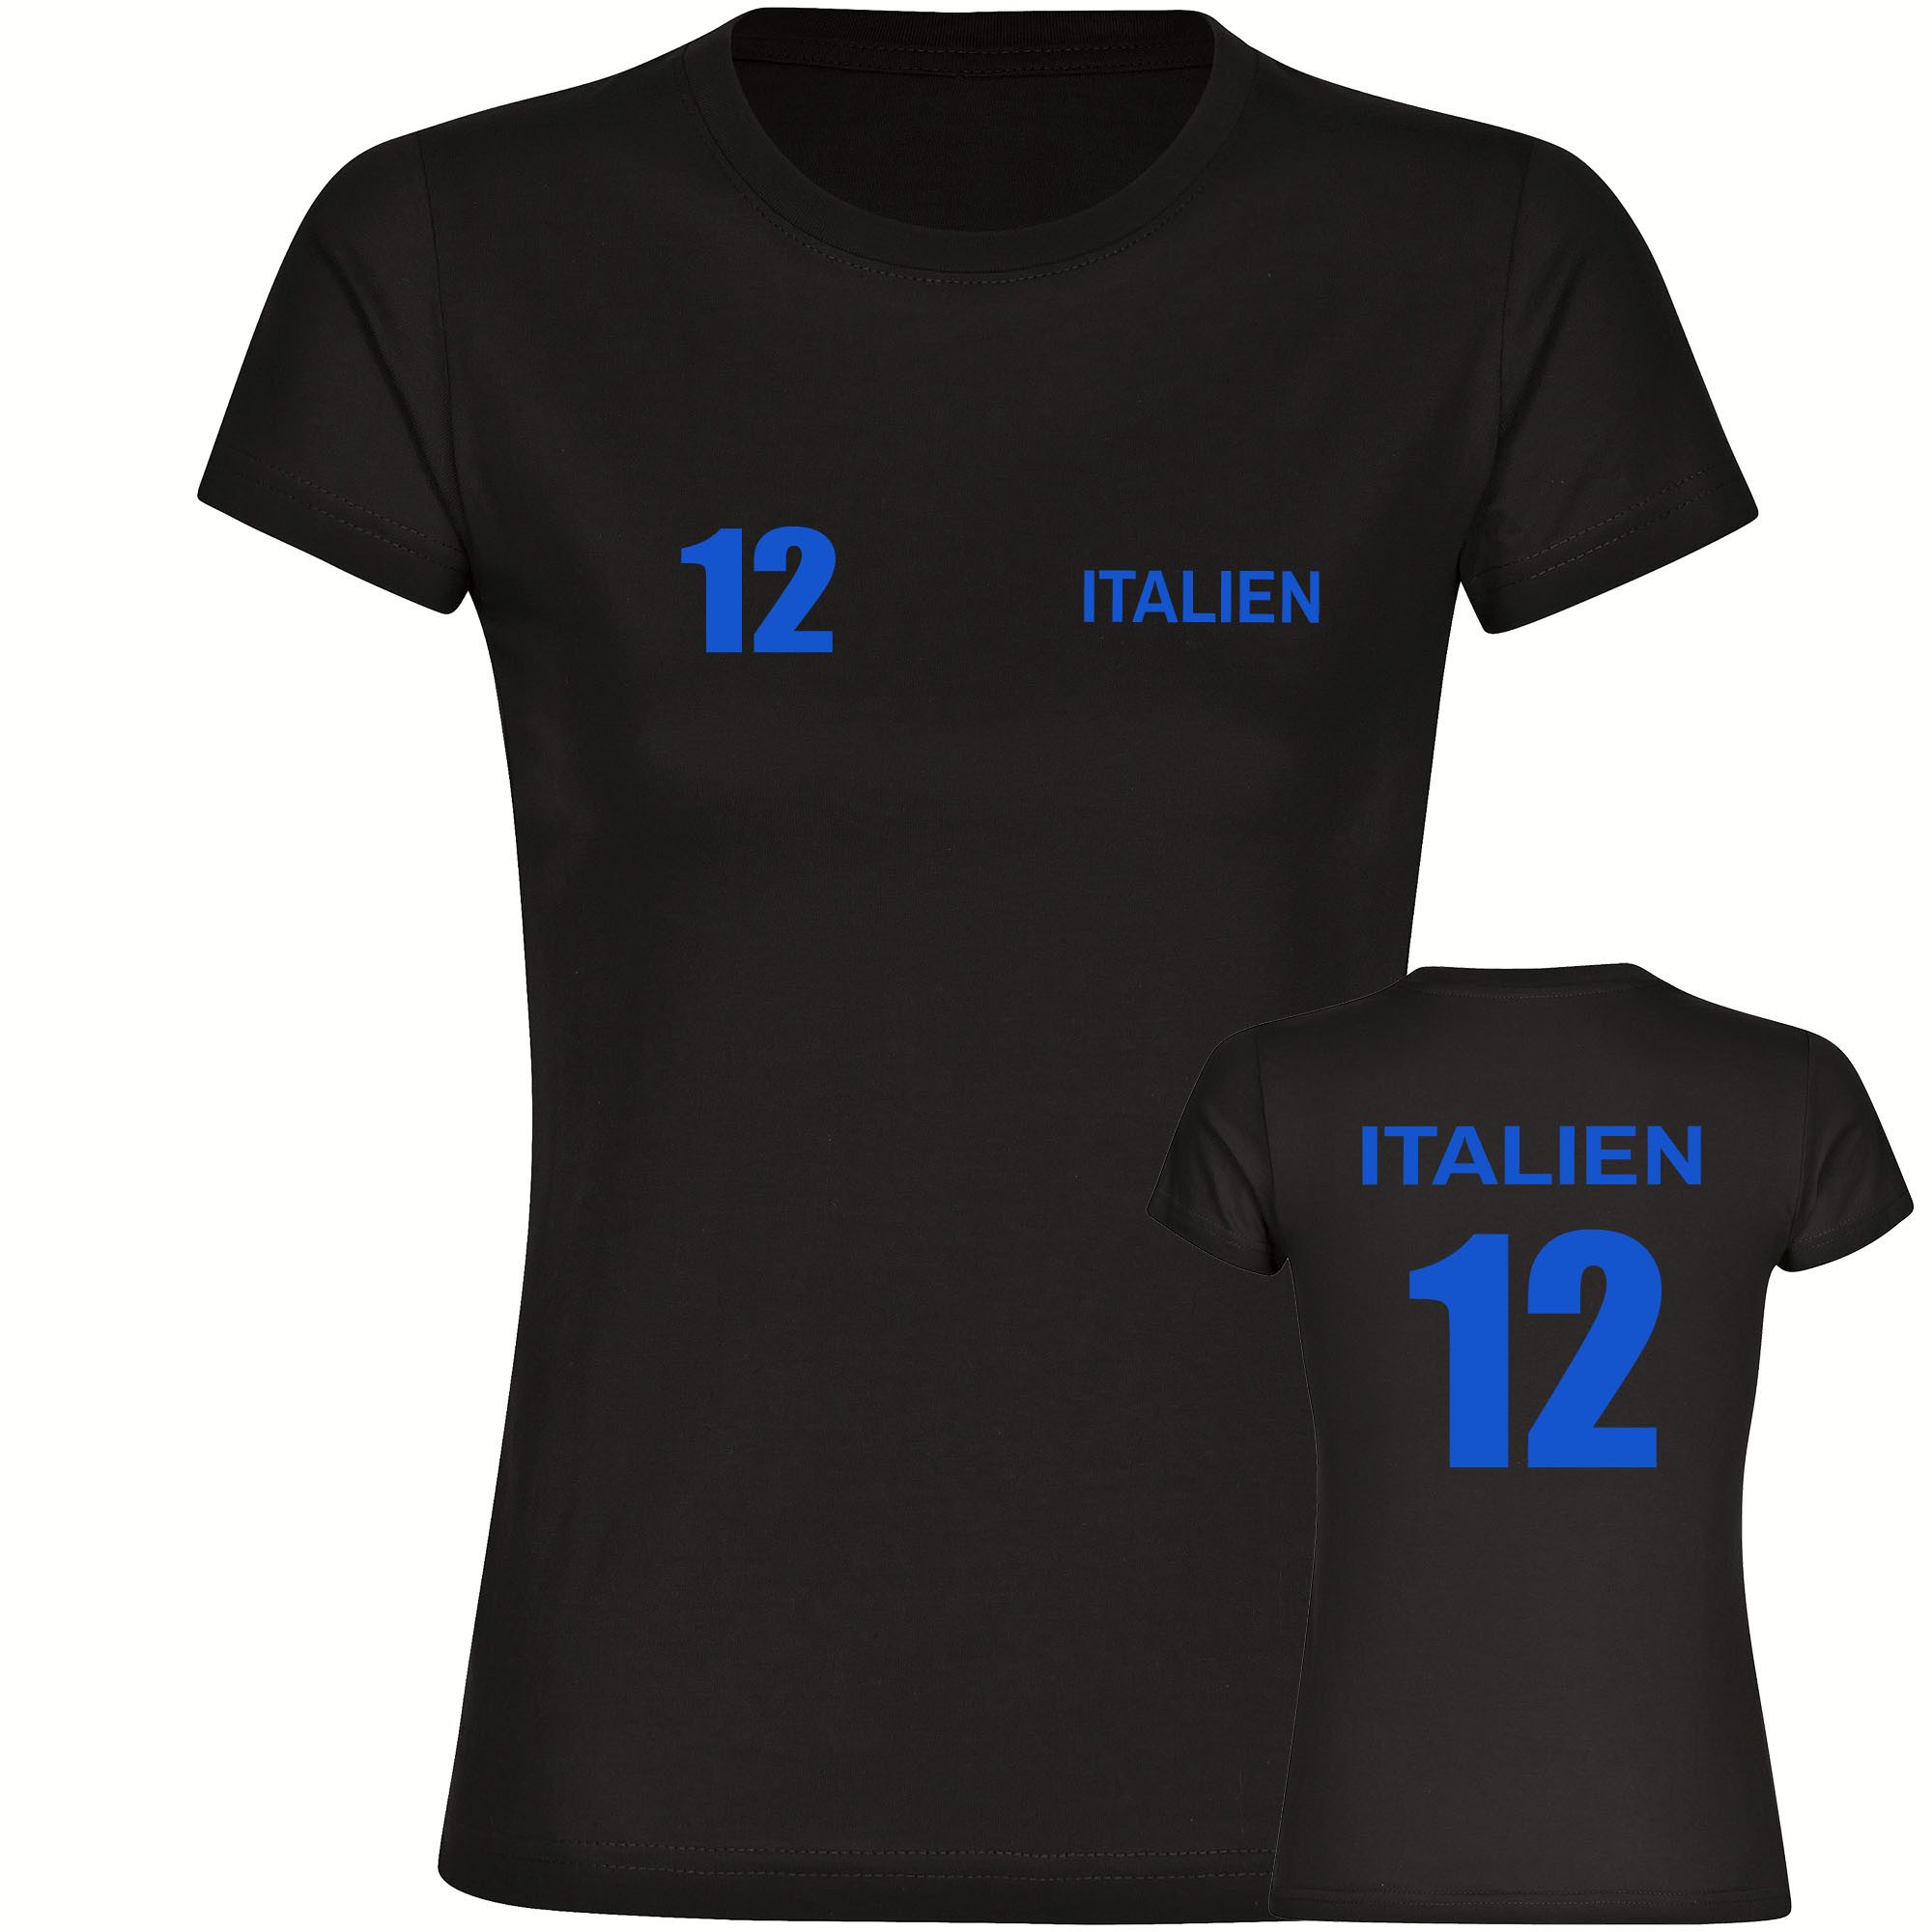 multifanshop T-Shirt Damen Italien - Trikot 12 - Frauen